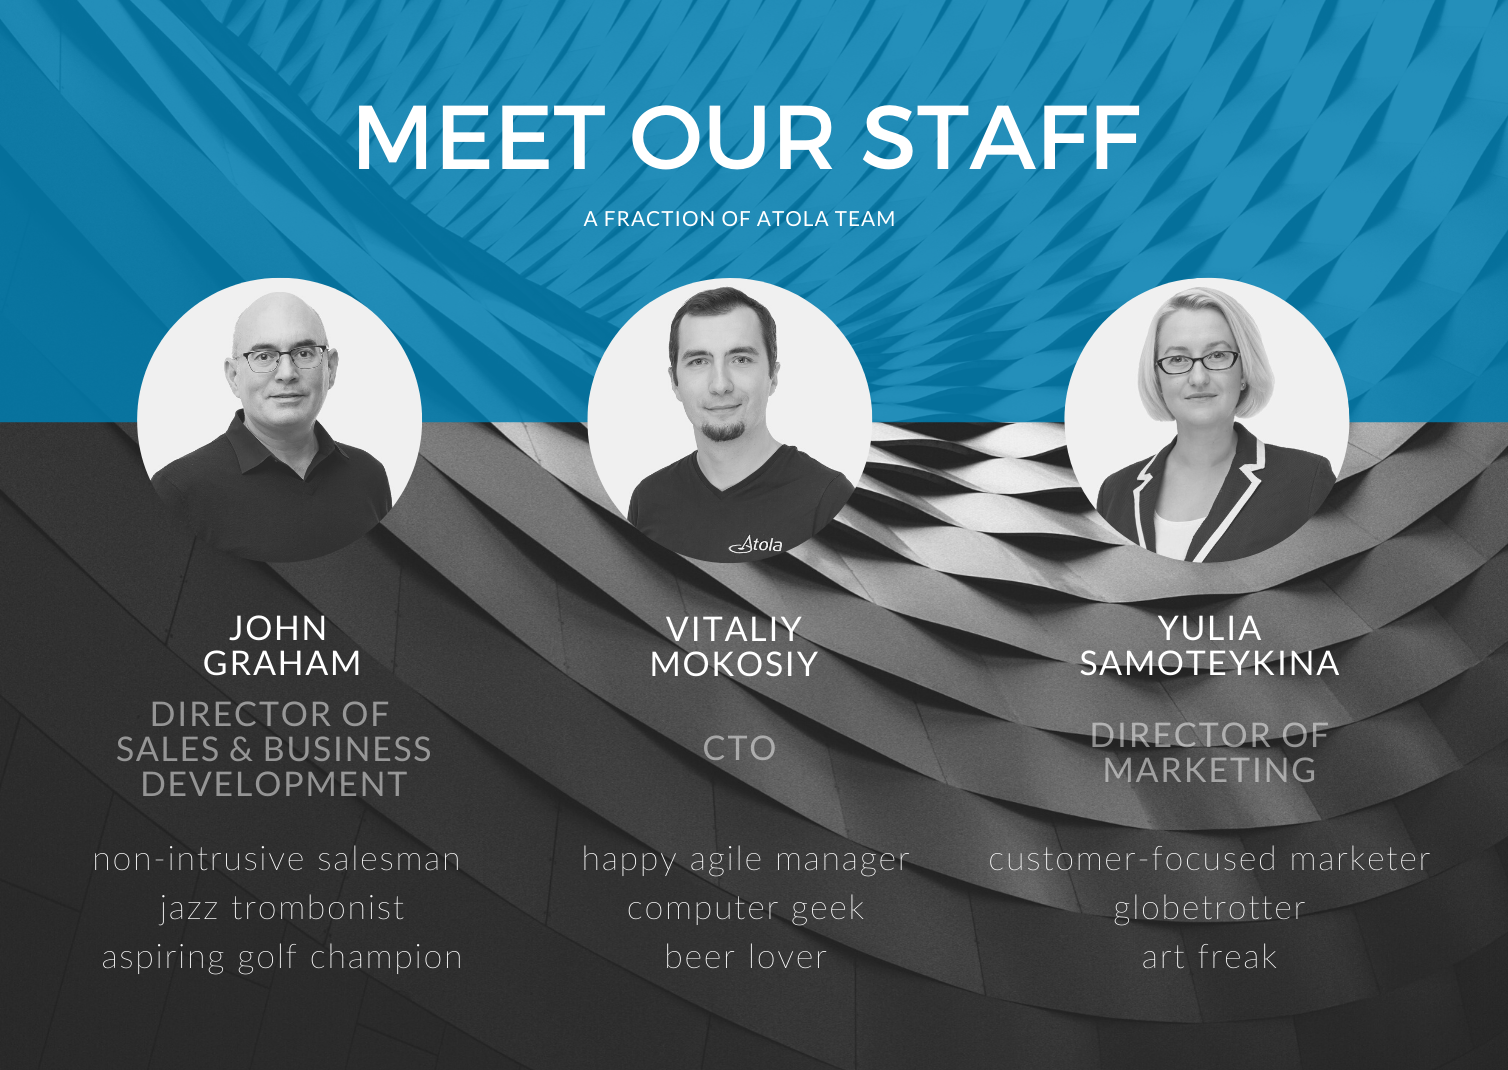 Meet our staff